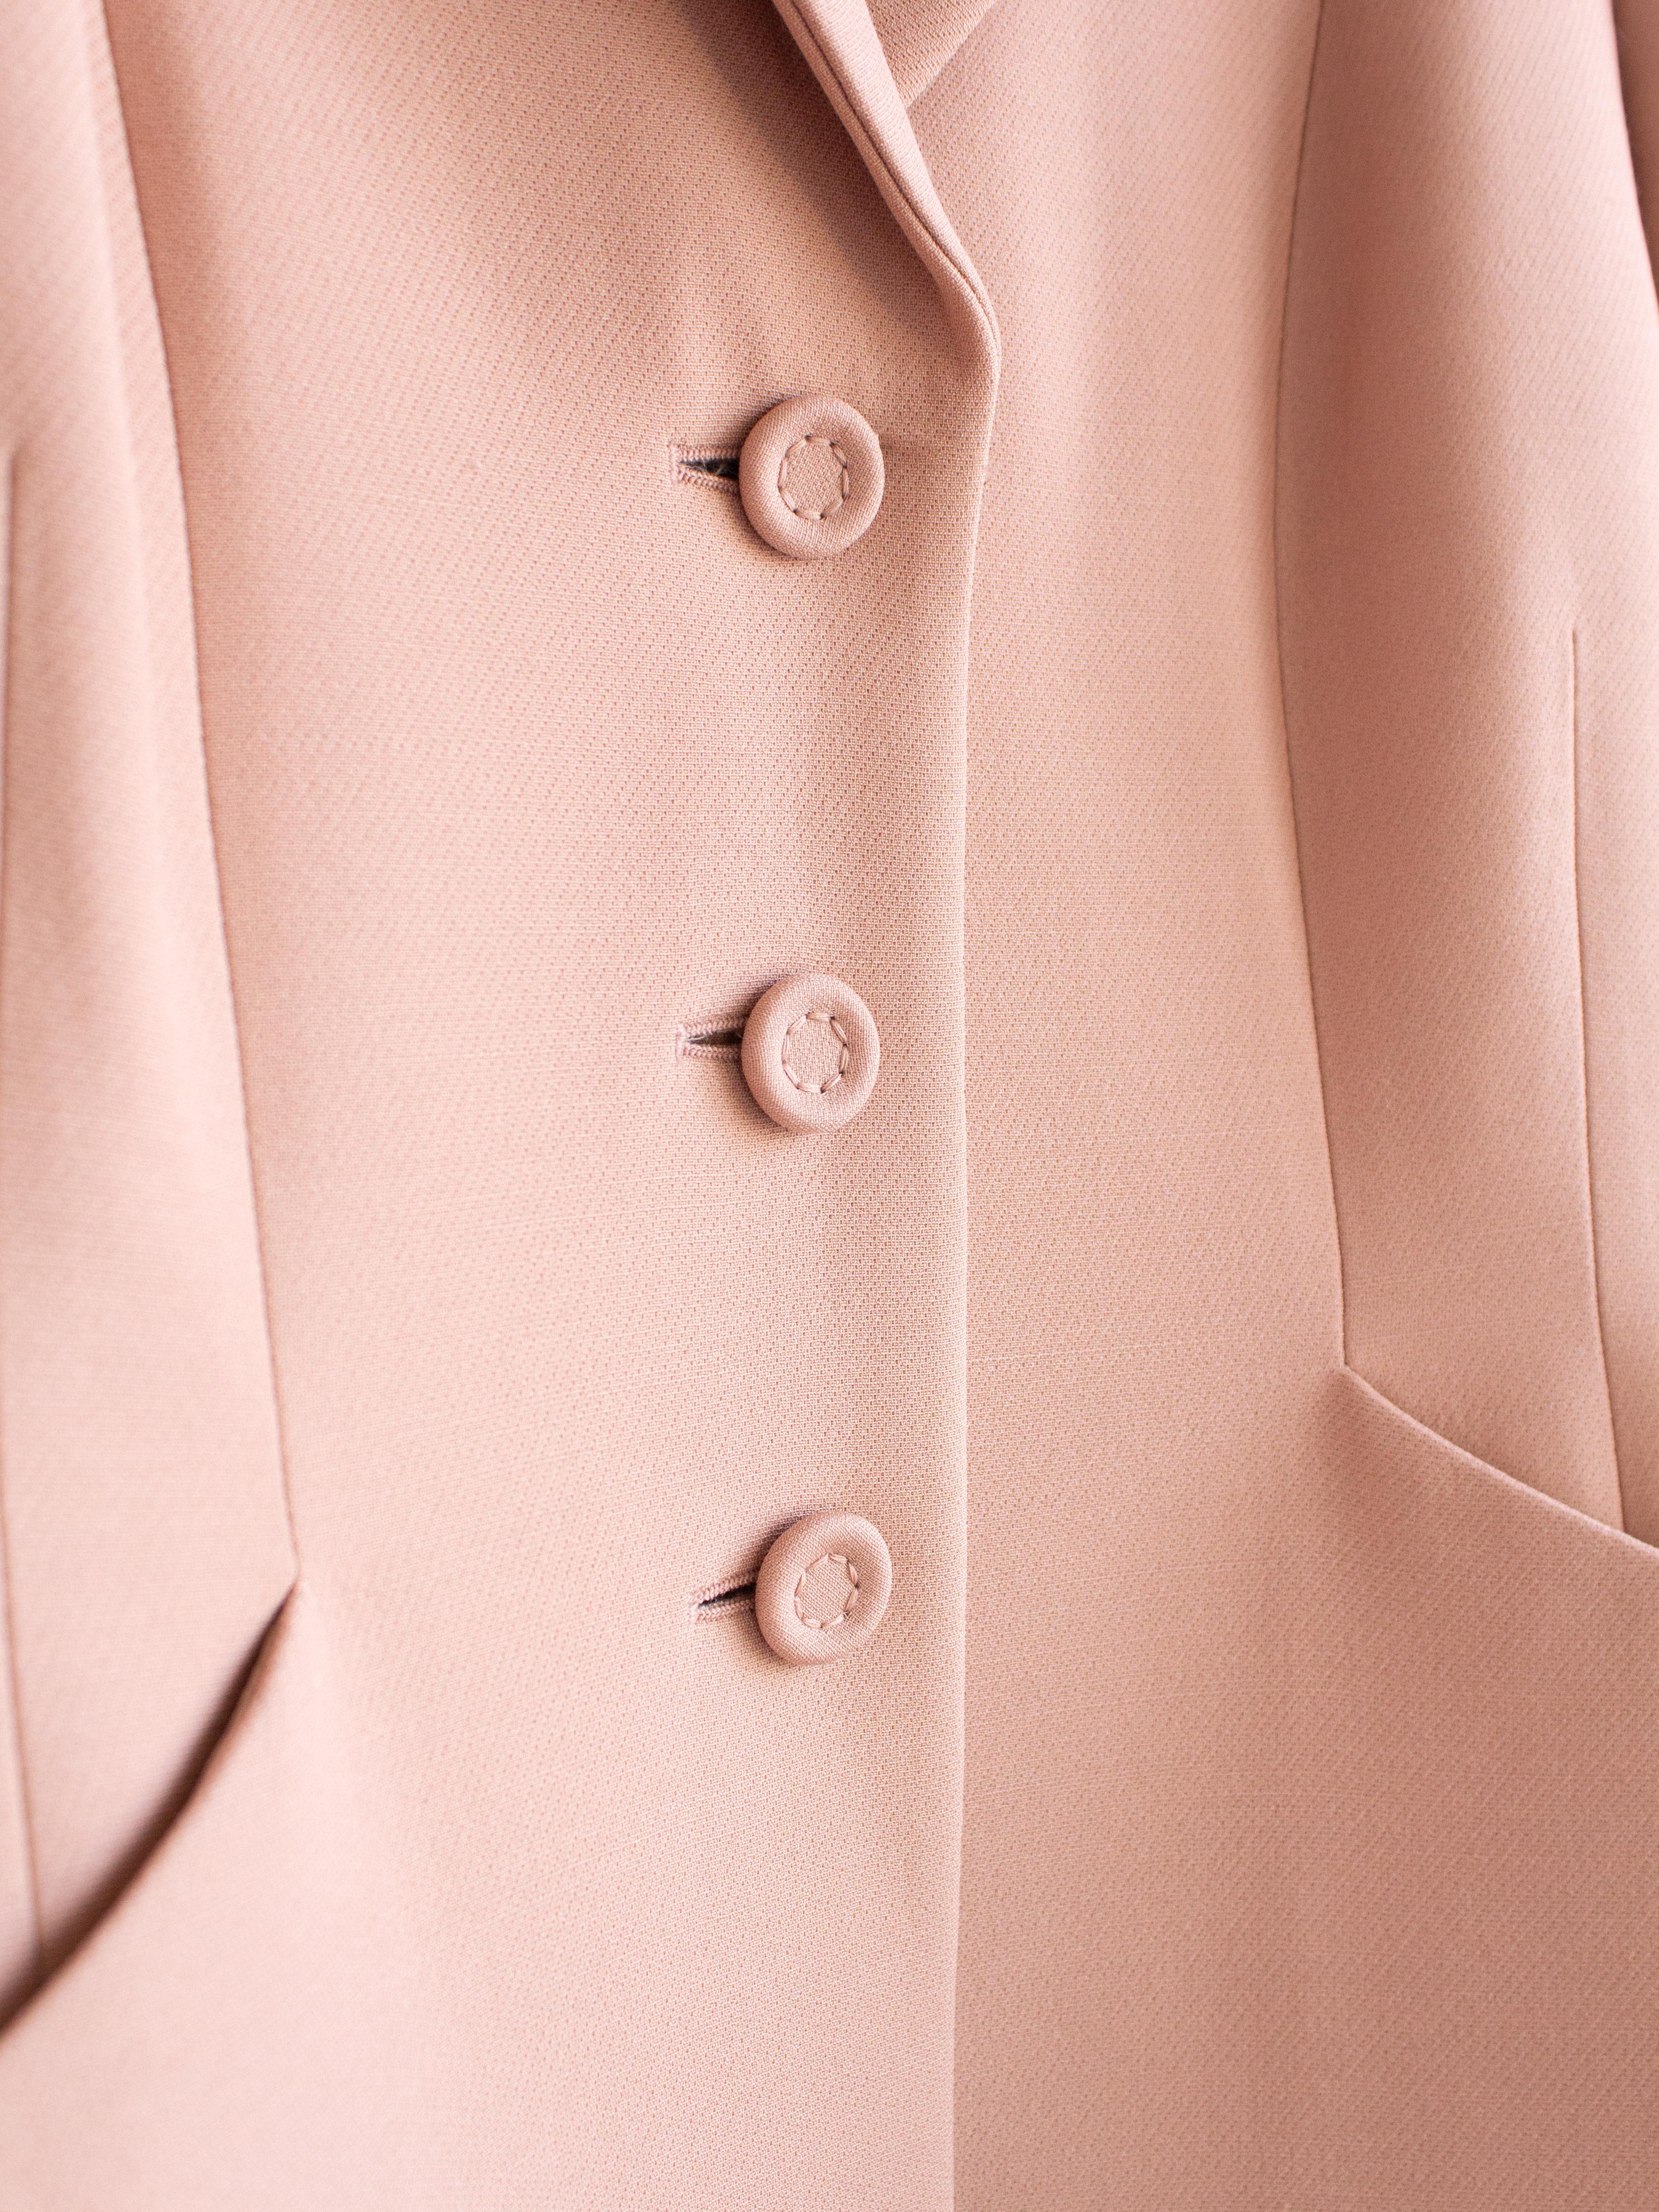 Dior 30 Montaigne Rose Des Vents Blush Pink Nude Bar Jacket For Sale 6